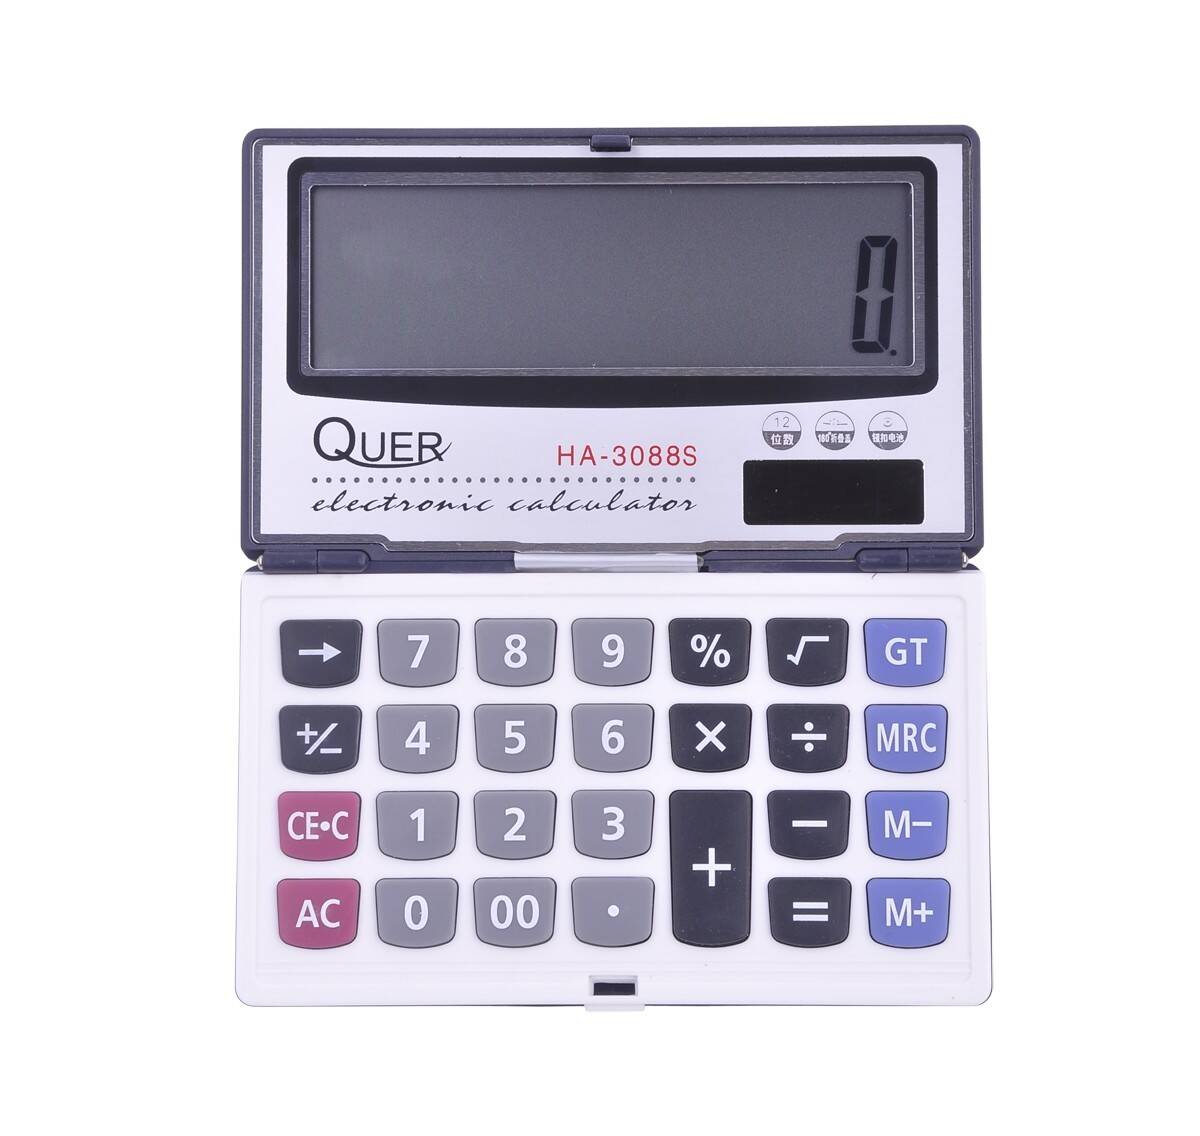 Kalkulator Kieszonkowy Ha-3088S2 Quer